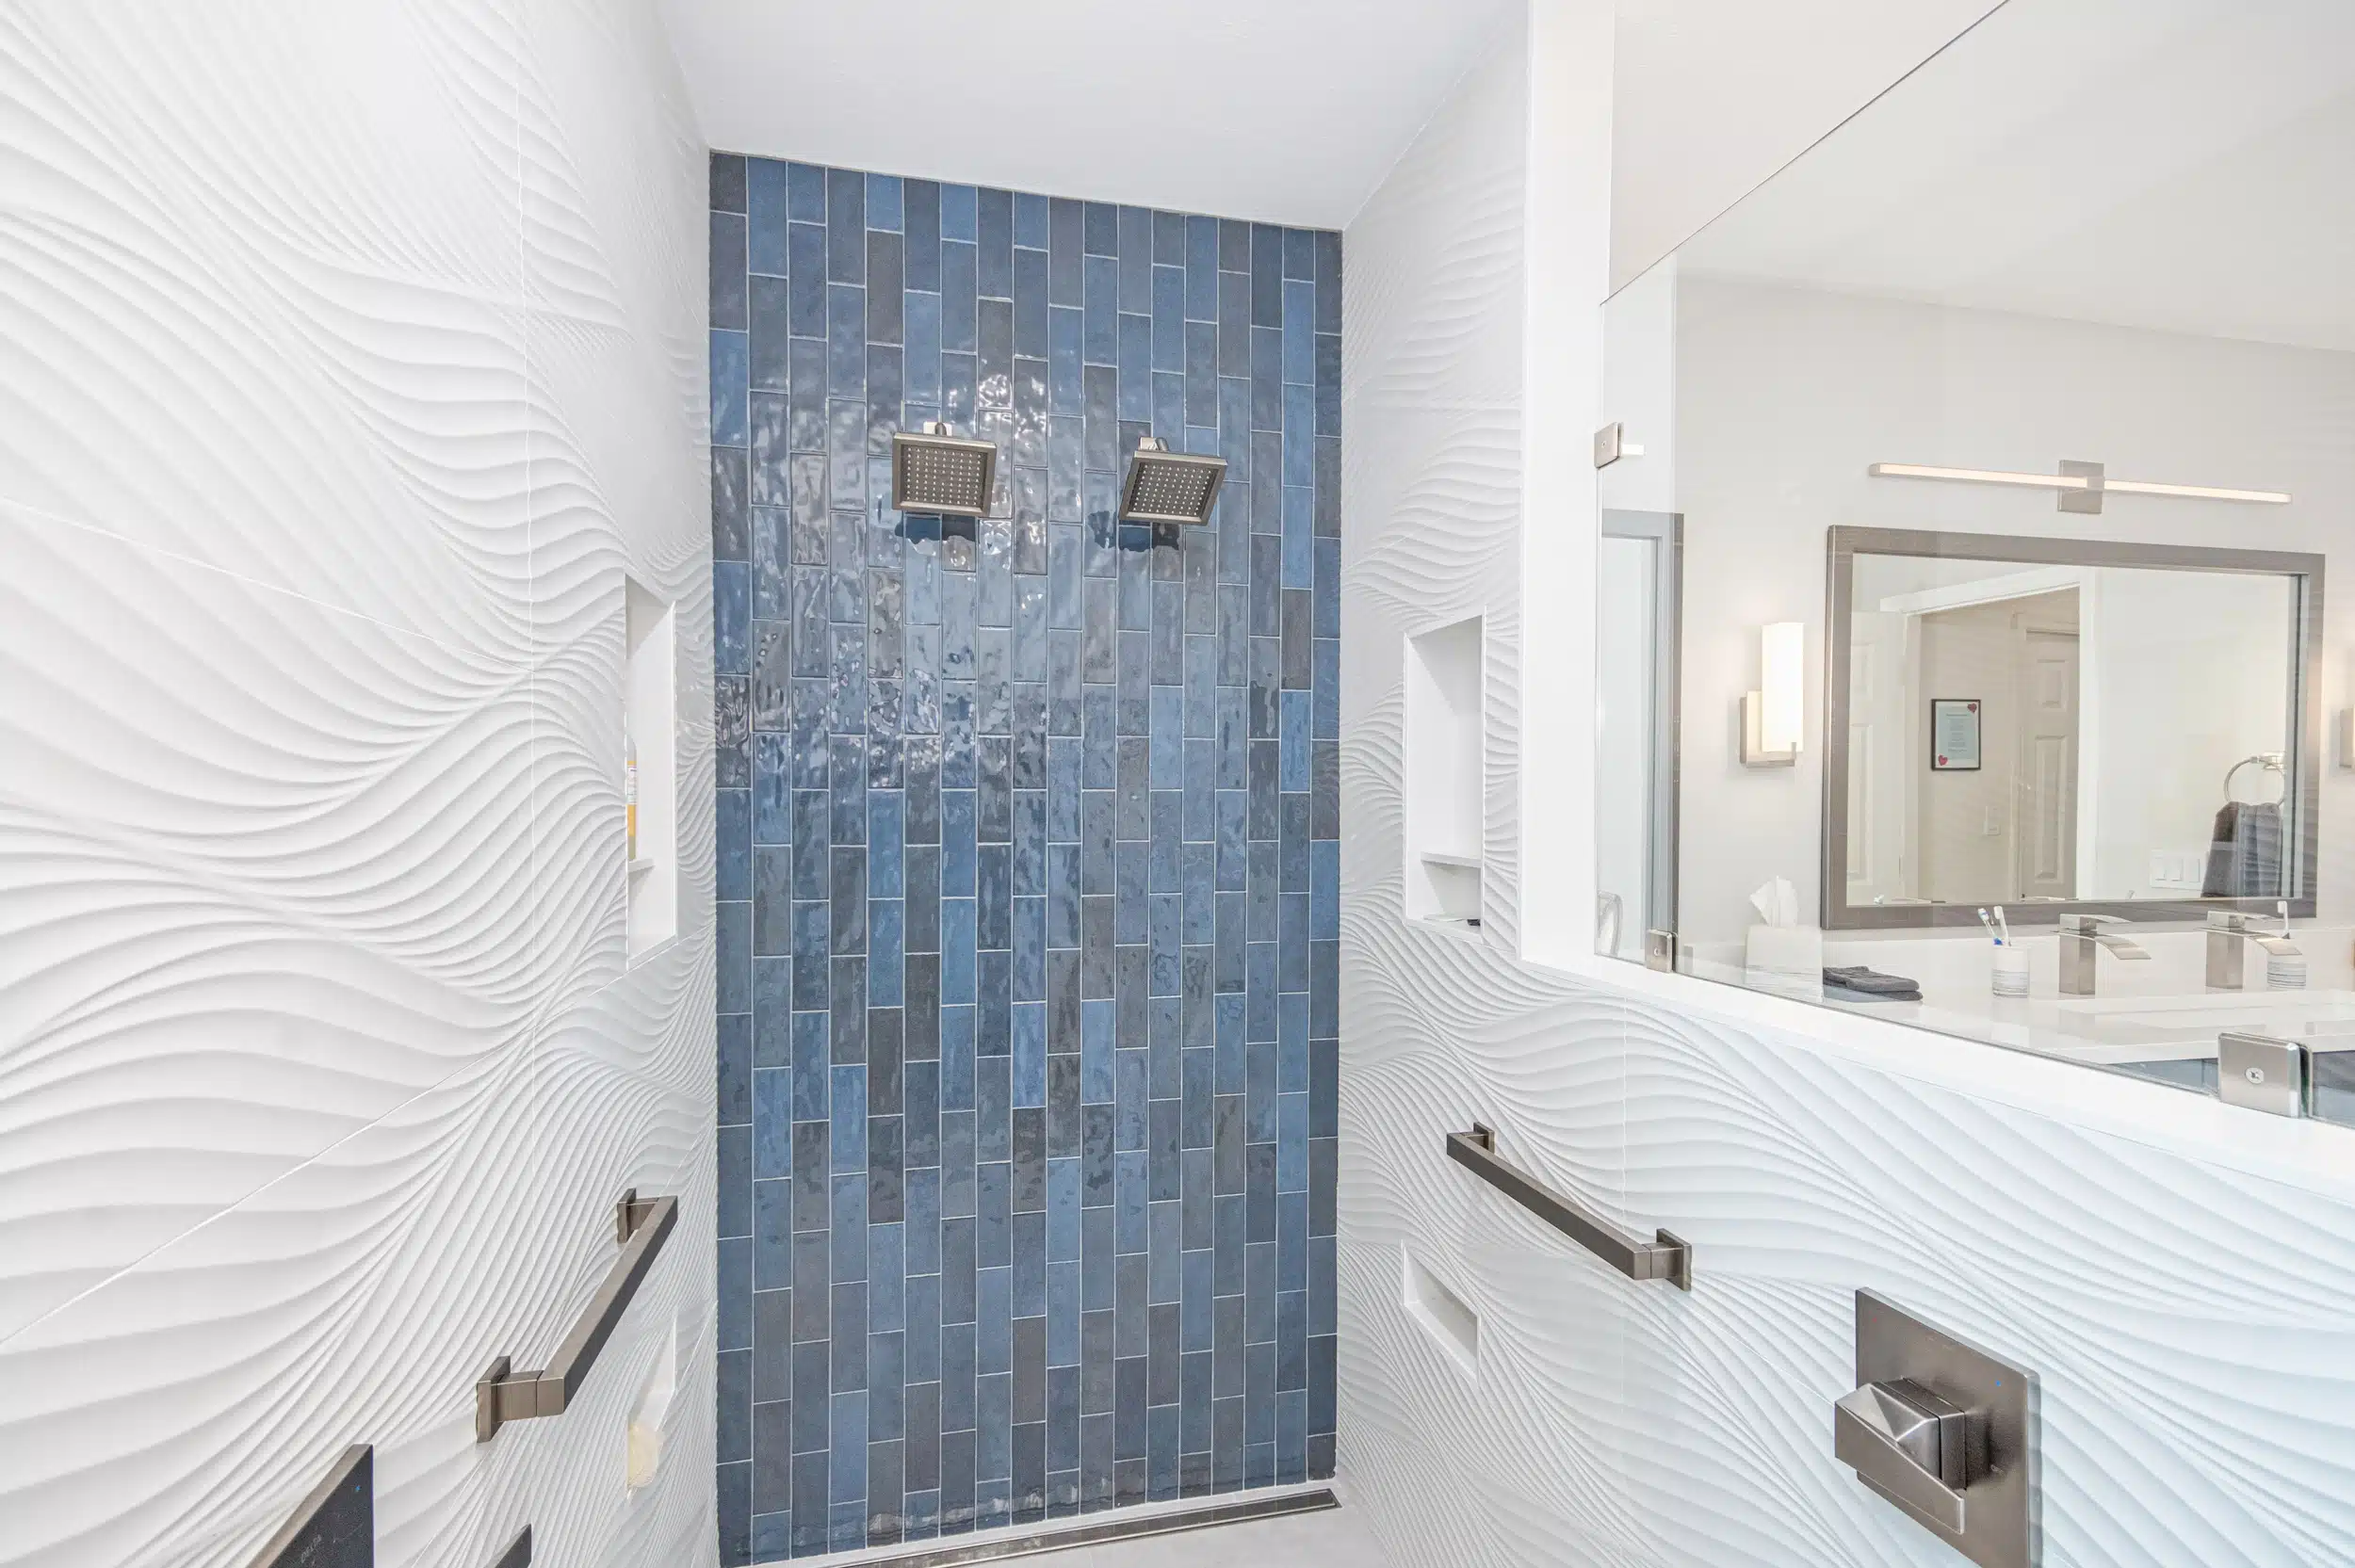 Shower Tile Installation Costs